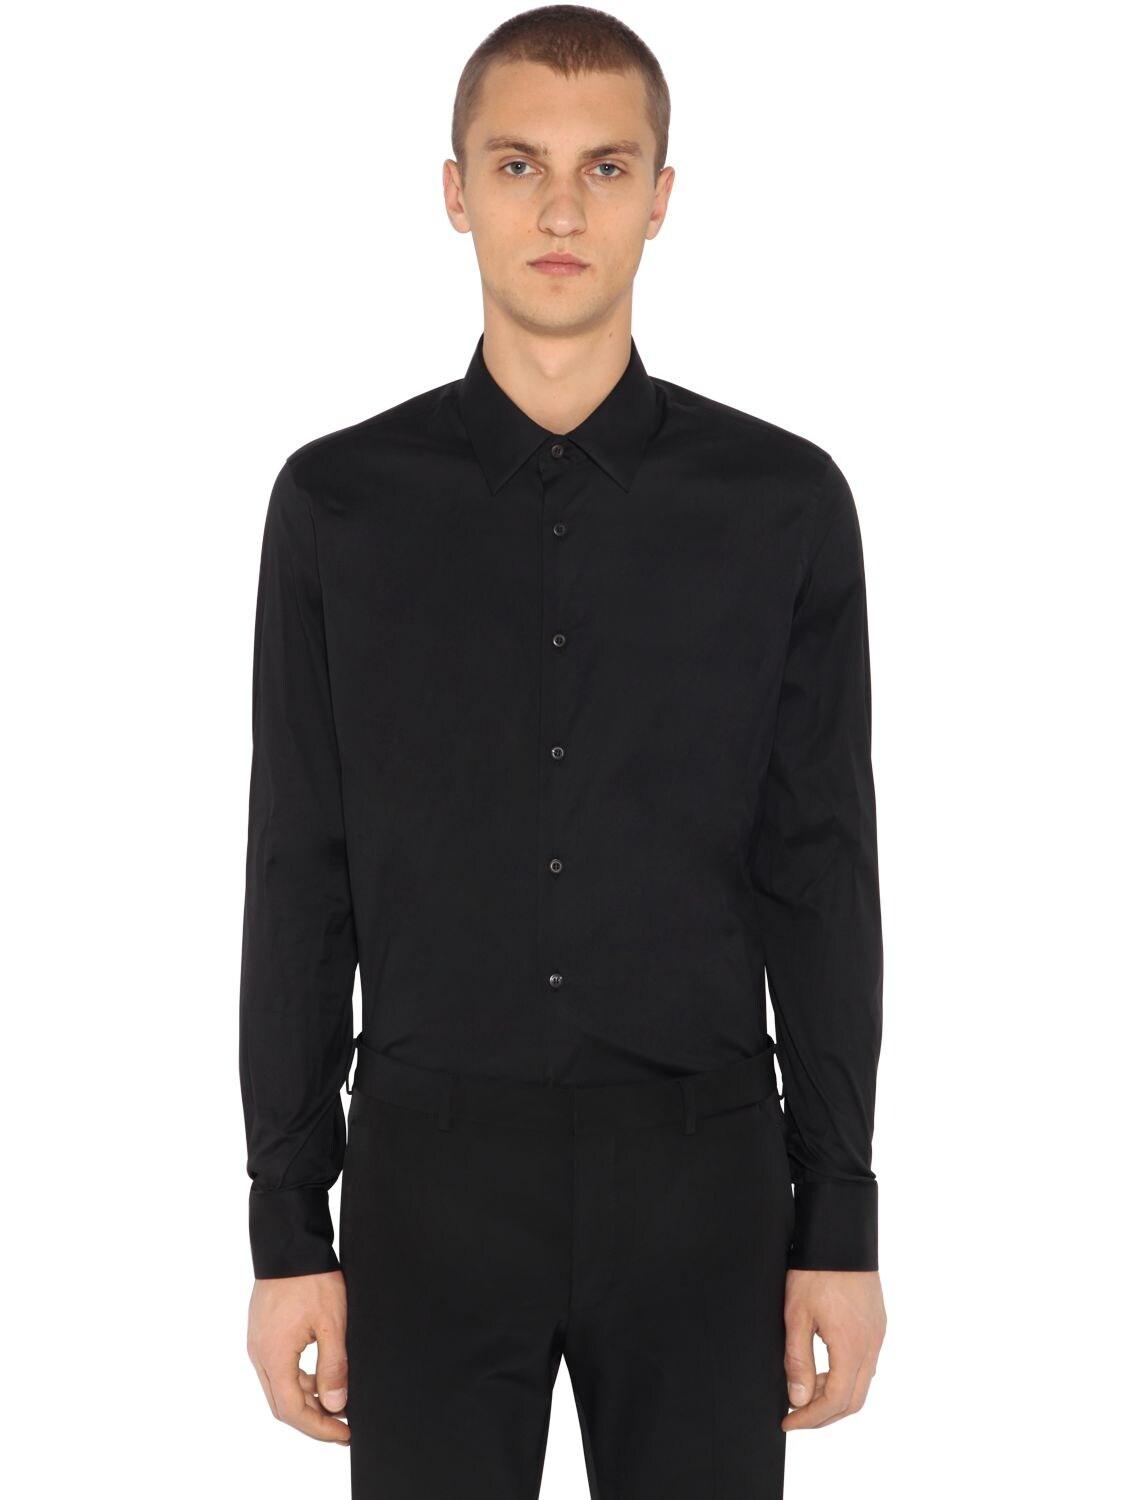 Prada Slim Stretch Cotton Poplin Shirt in Black for Men - Save 34% - Lyst